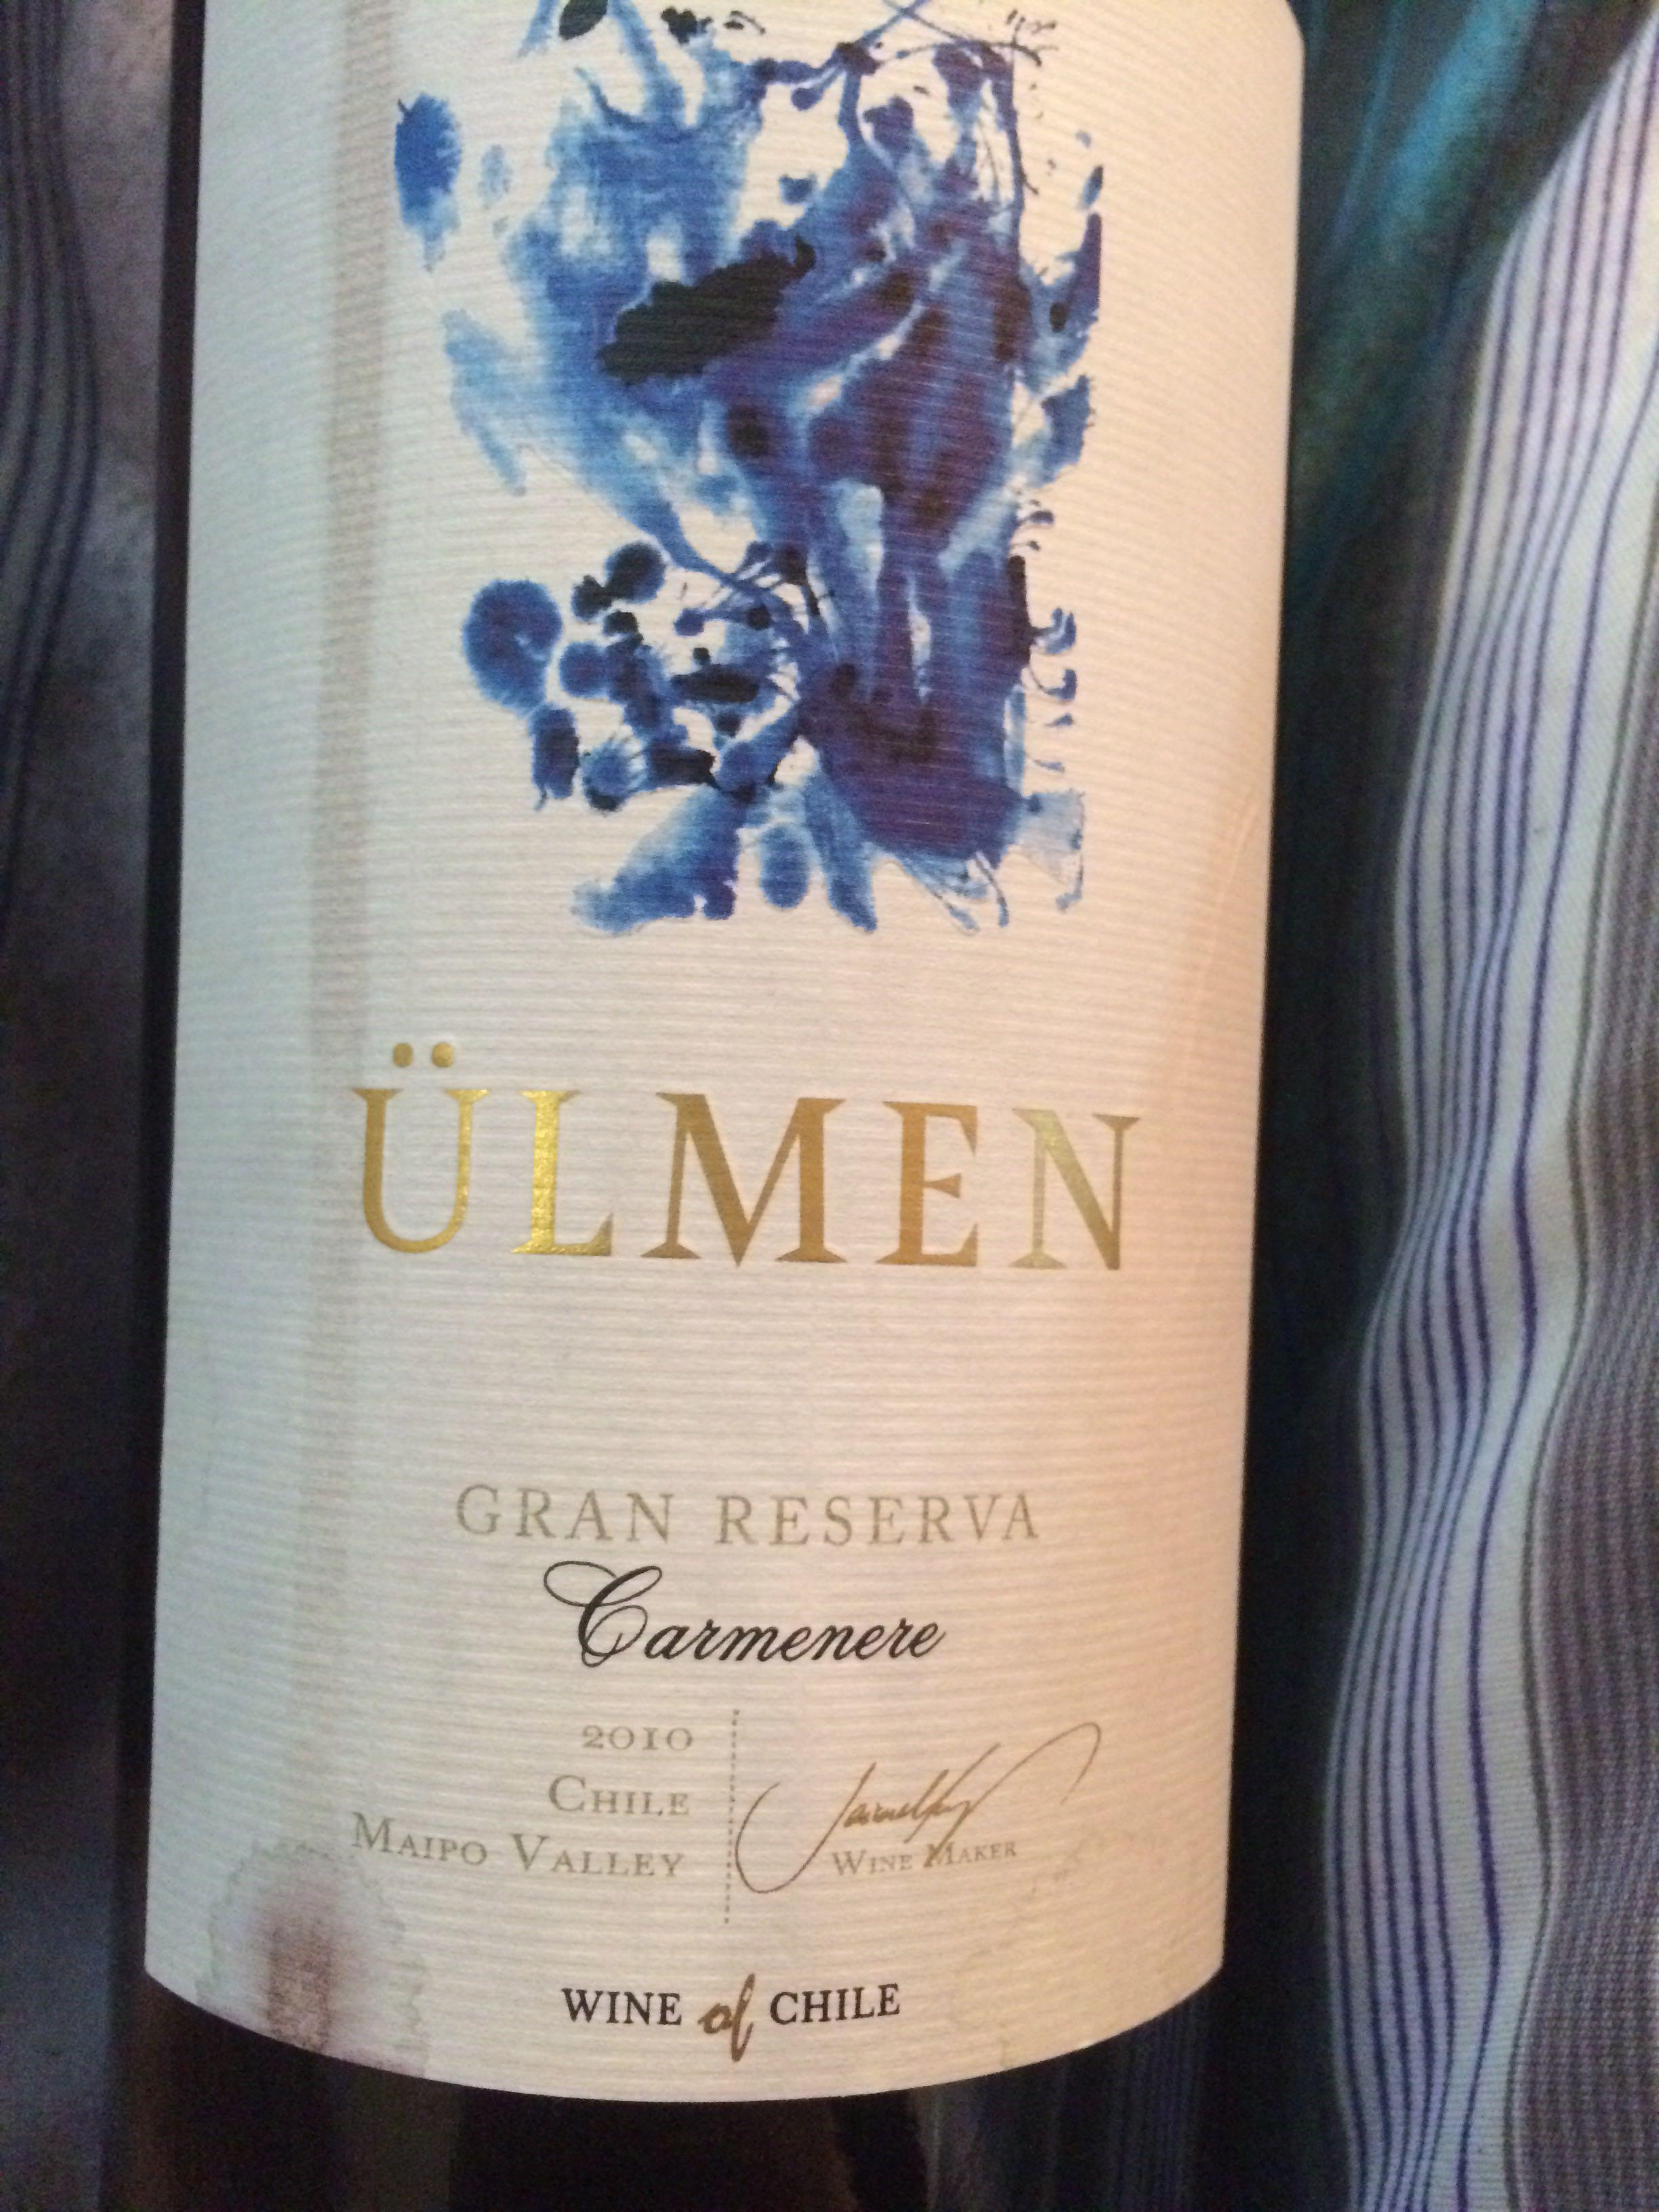 UlMEN Gran reserva 2010 红酒多少钱? - 酒